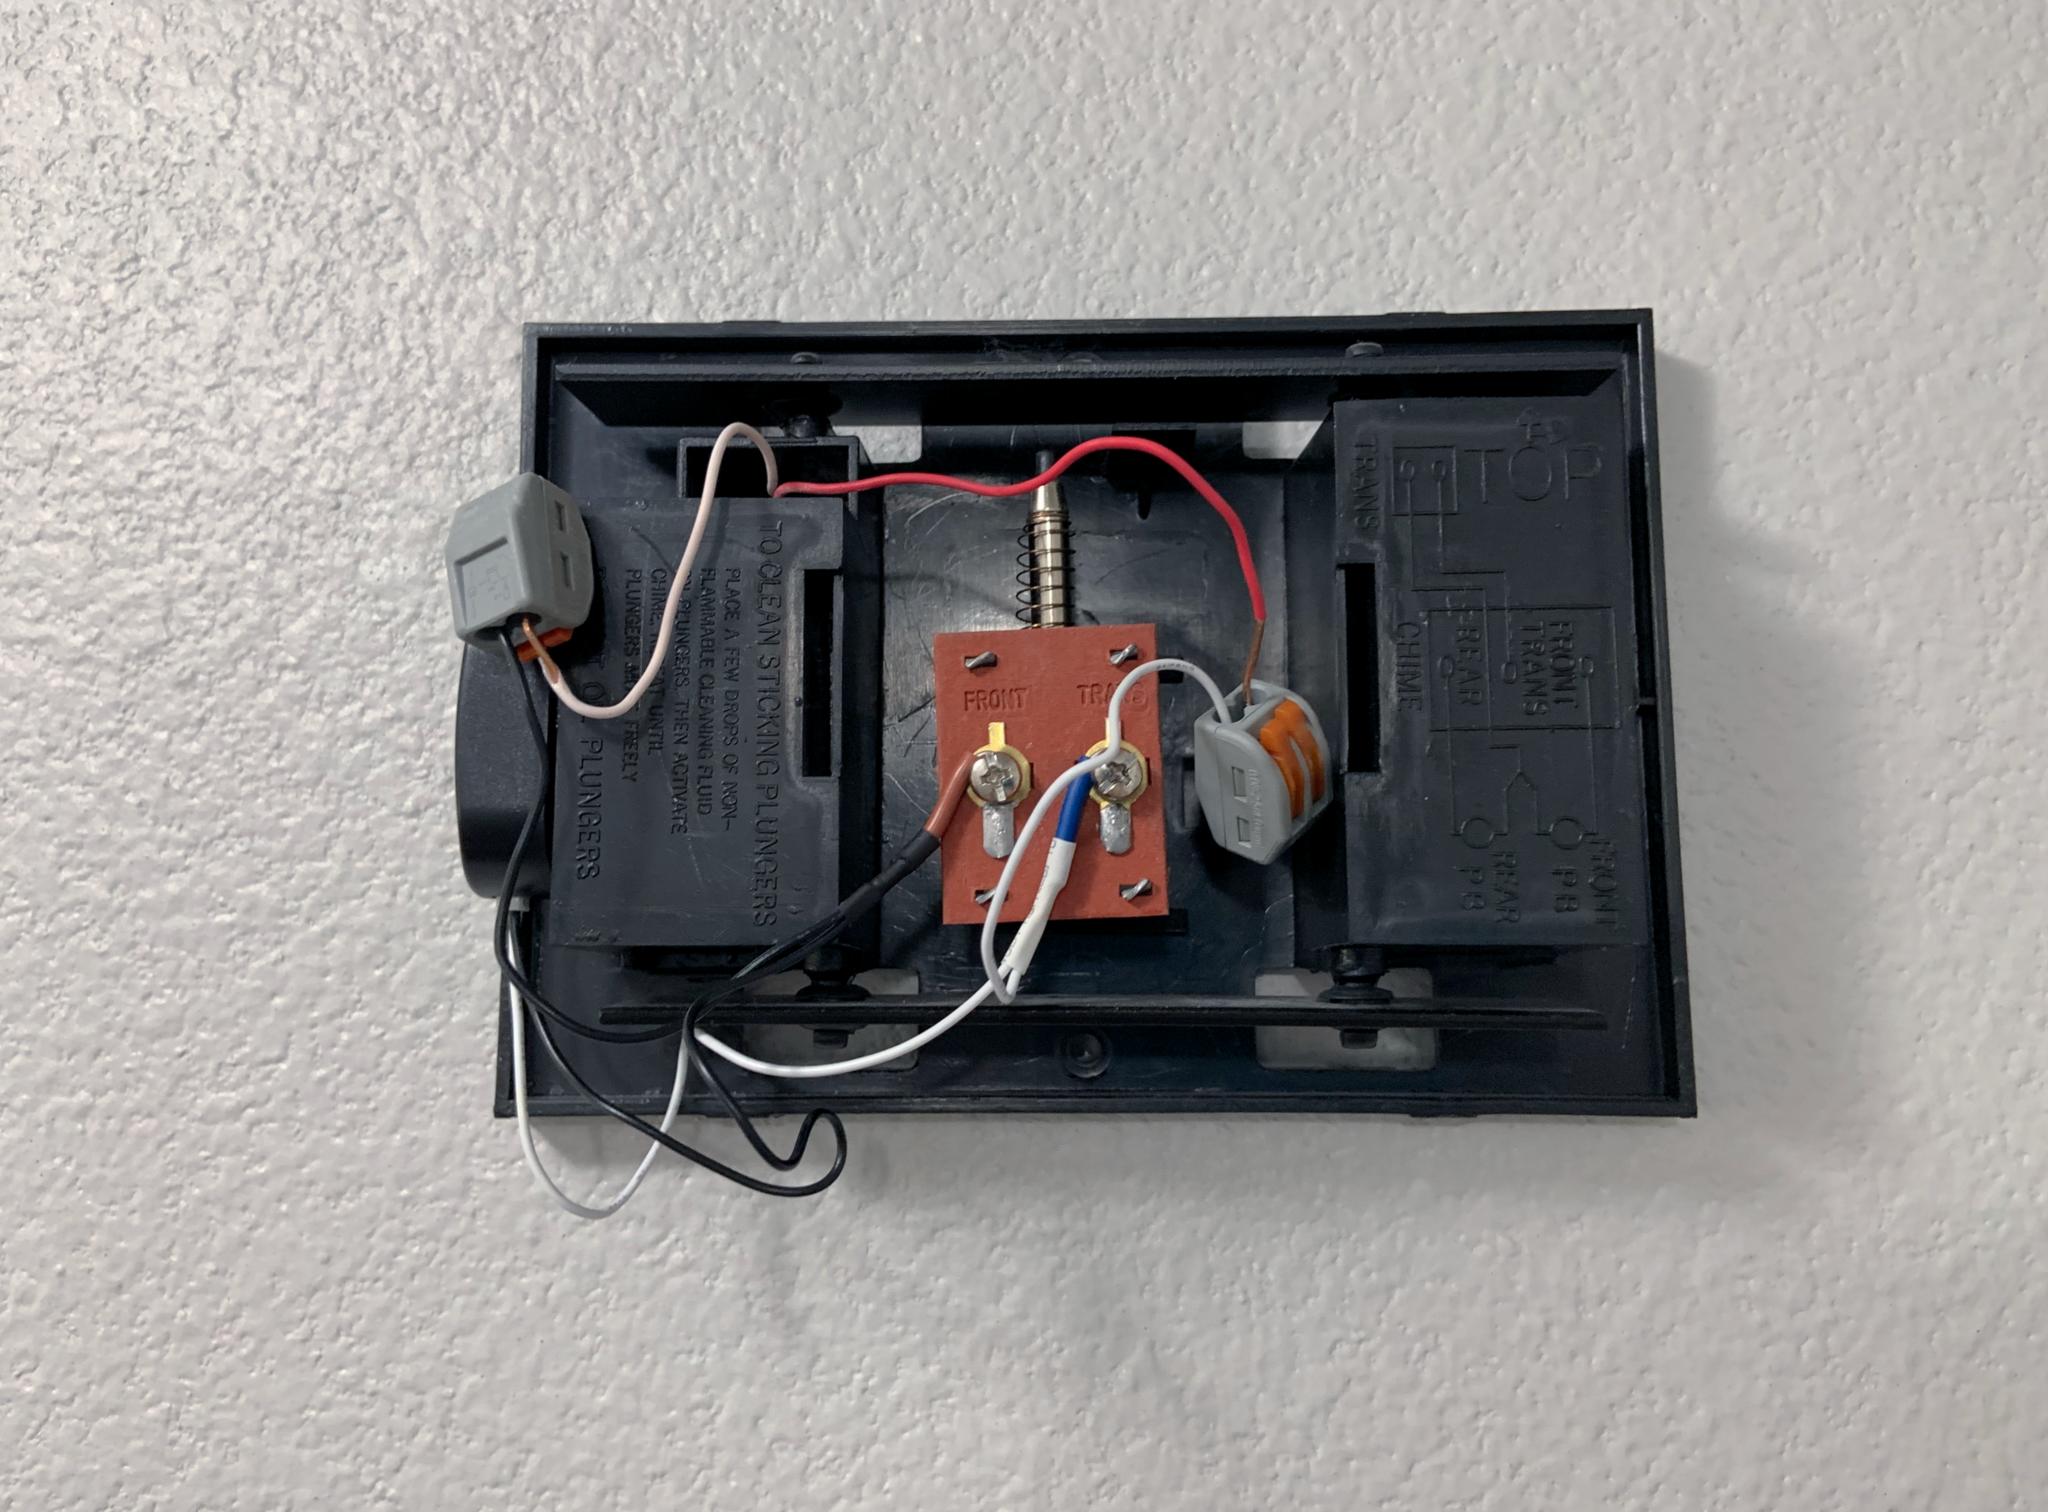 Yobi B3 Video Doorbell Review Chime Wiring